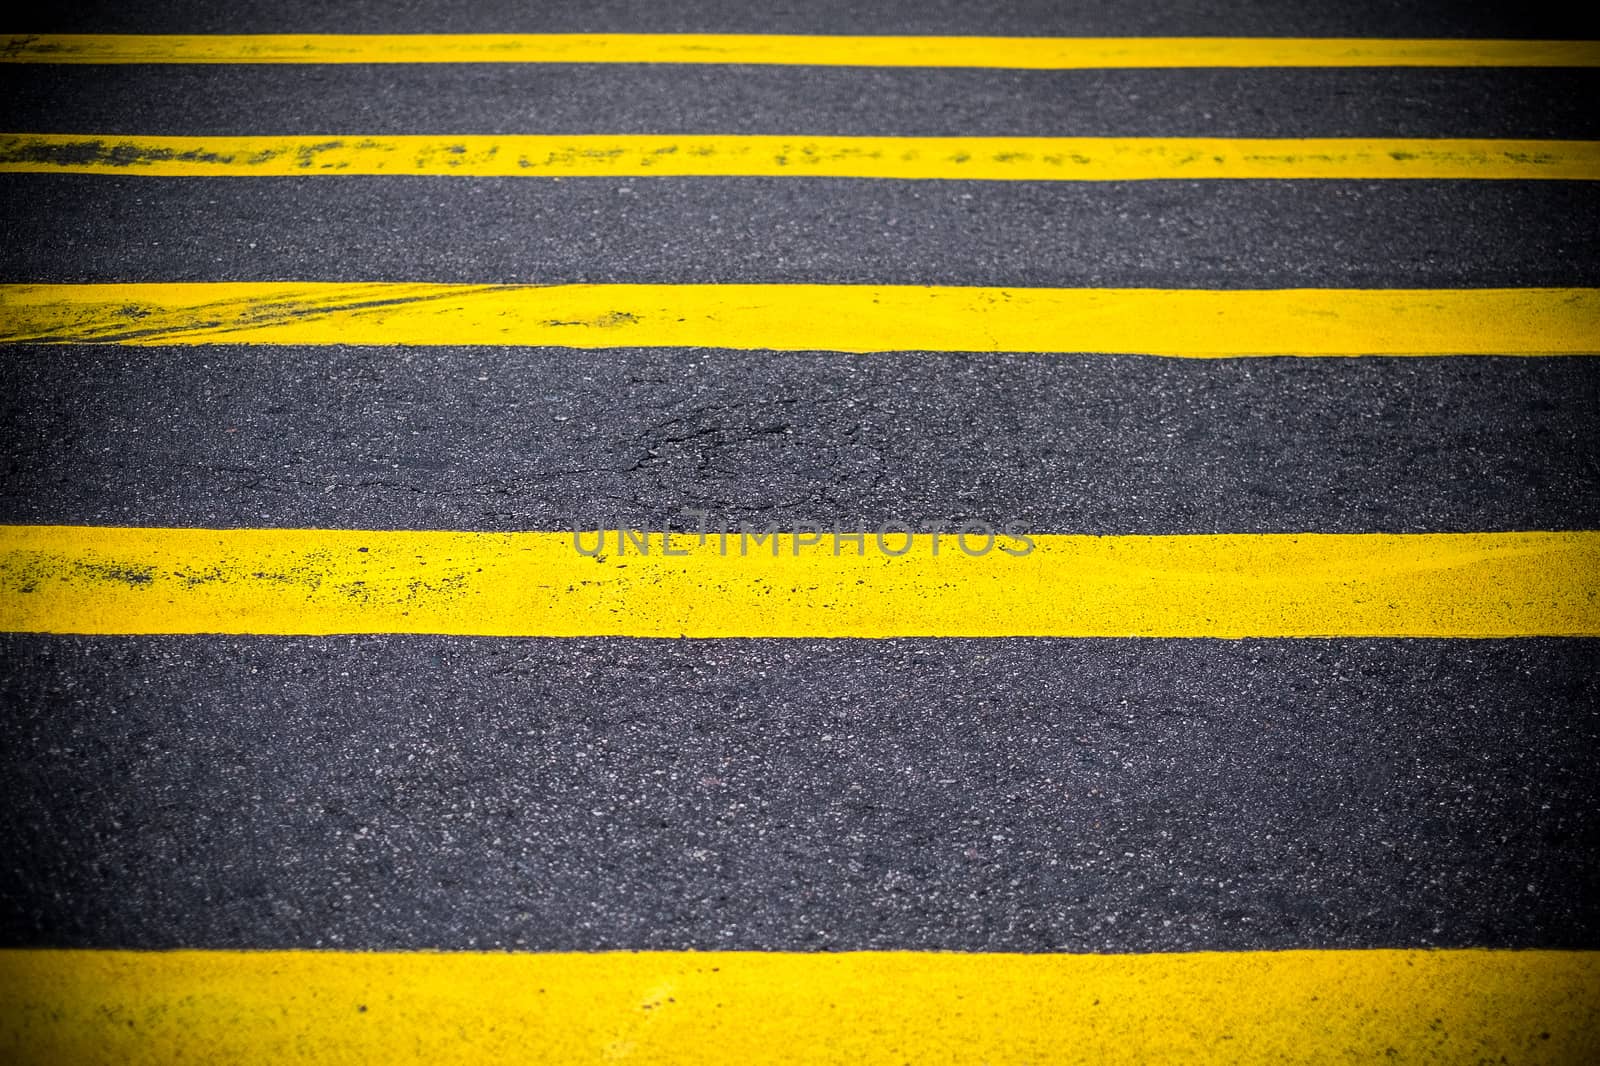 Road Marking Yellow Lines on asphalt by Surasak